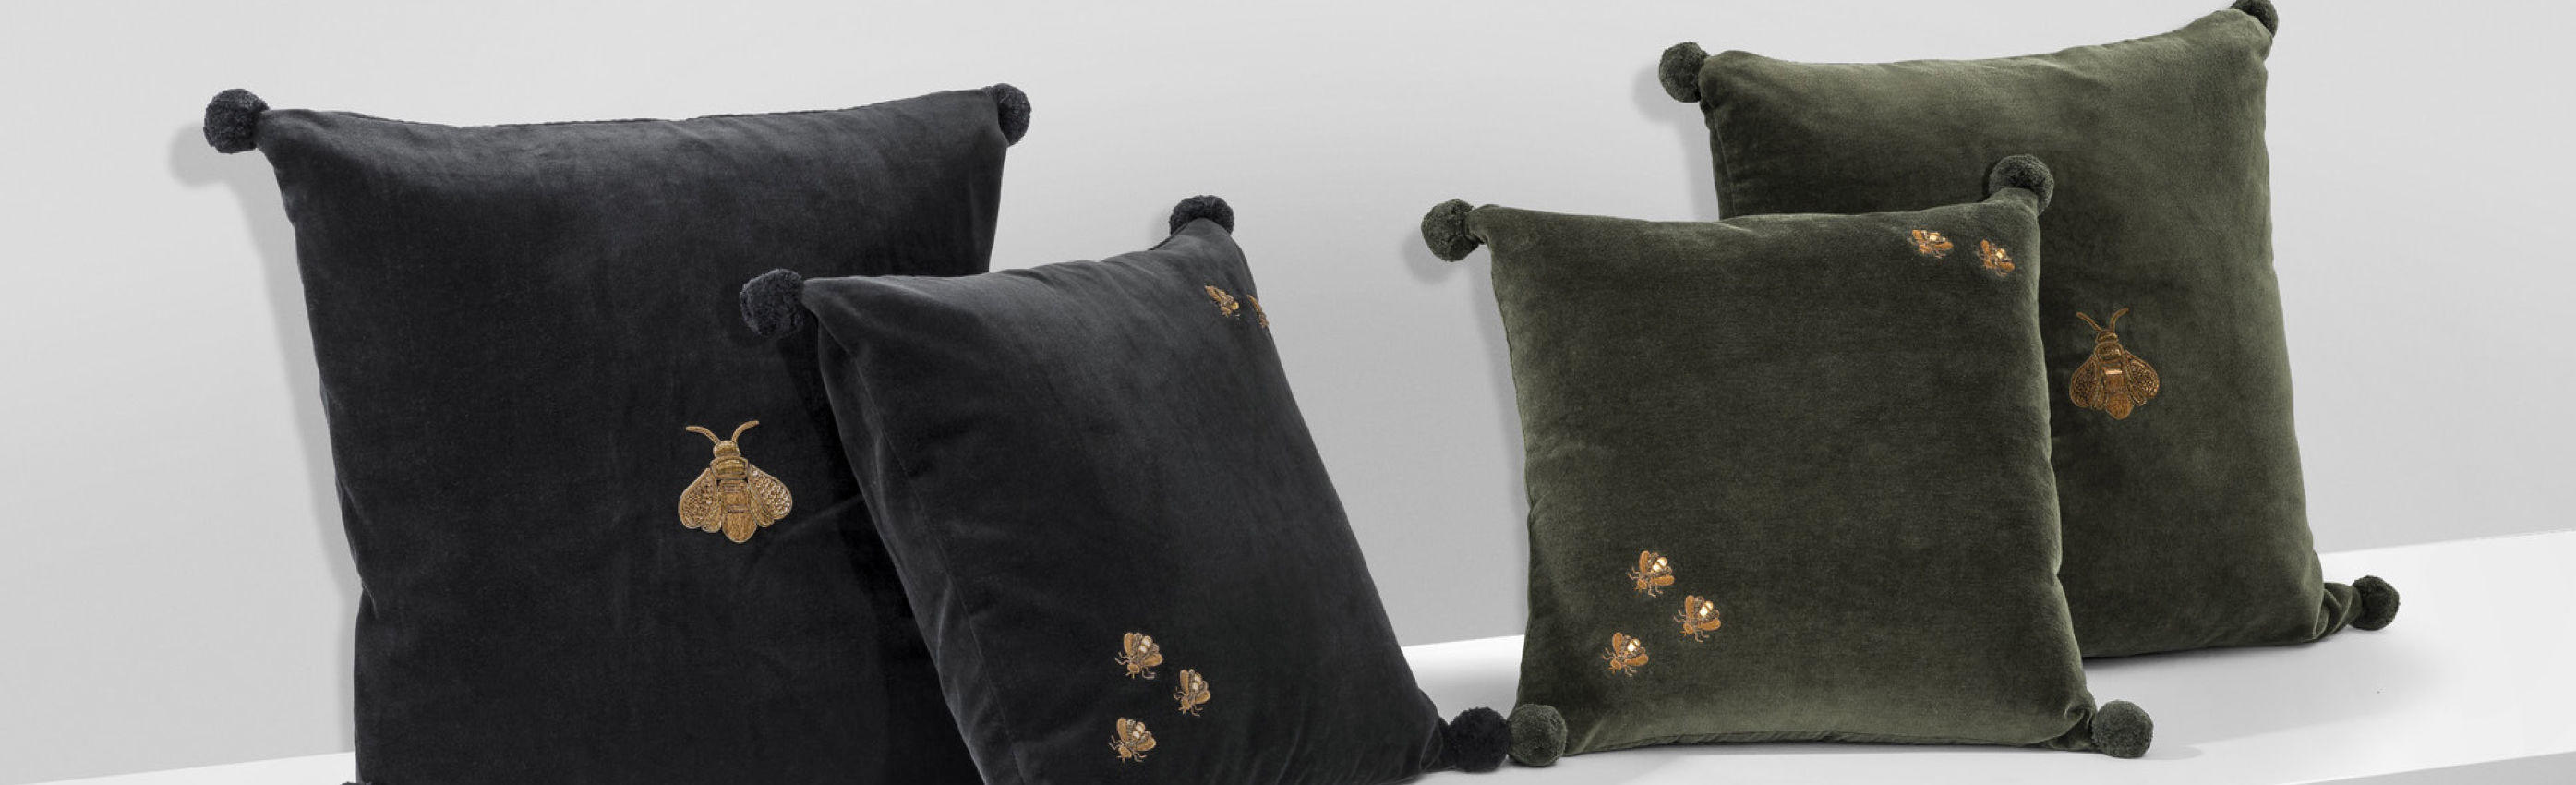 Pillows, plaids & home textiles